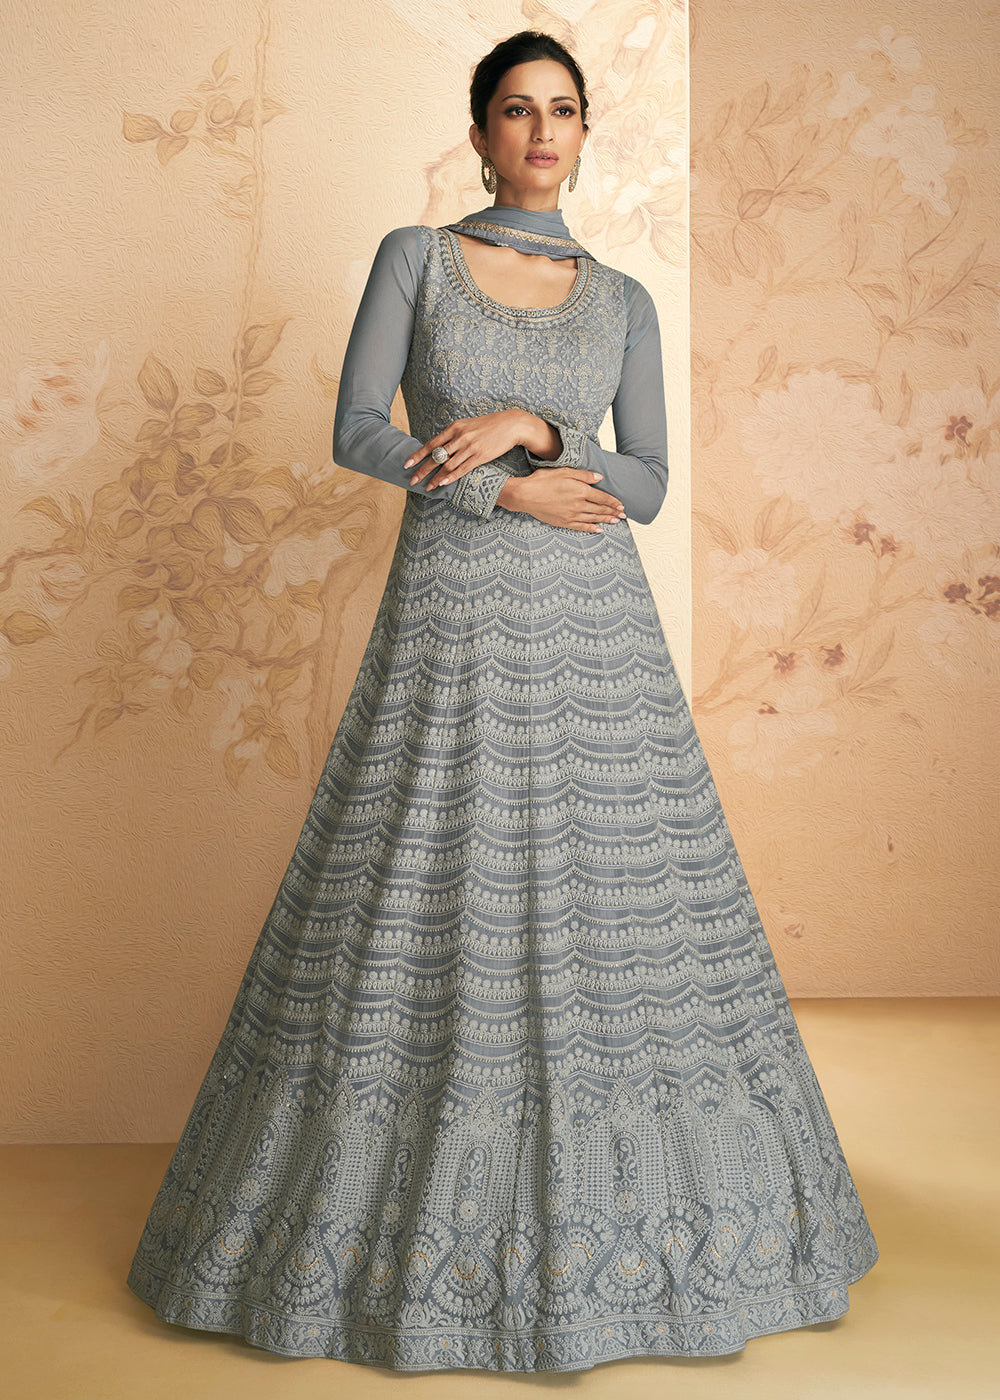 Buy Now Chikankari Style Grey Traditional Work Festive Anarkali Gown Online in USA, UK, Australia, New Zealand, Canada & Worldwide at Empress Clothing. 